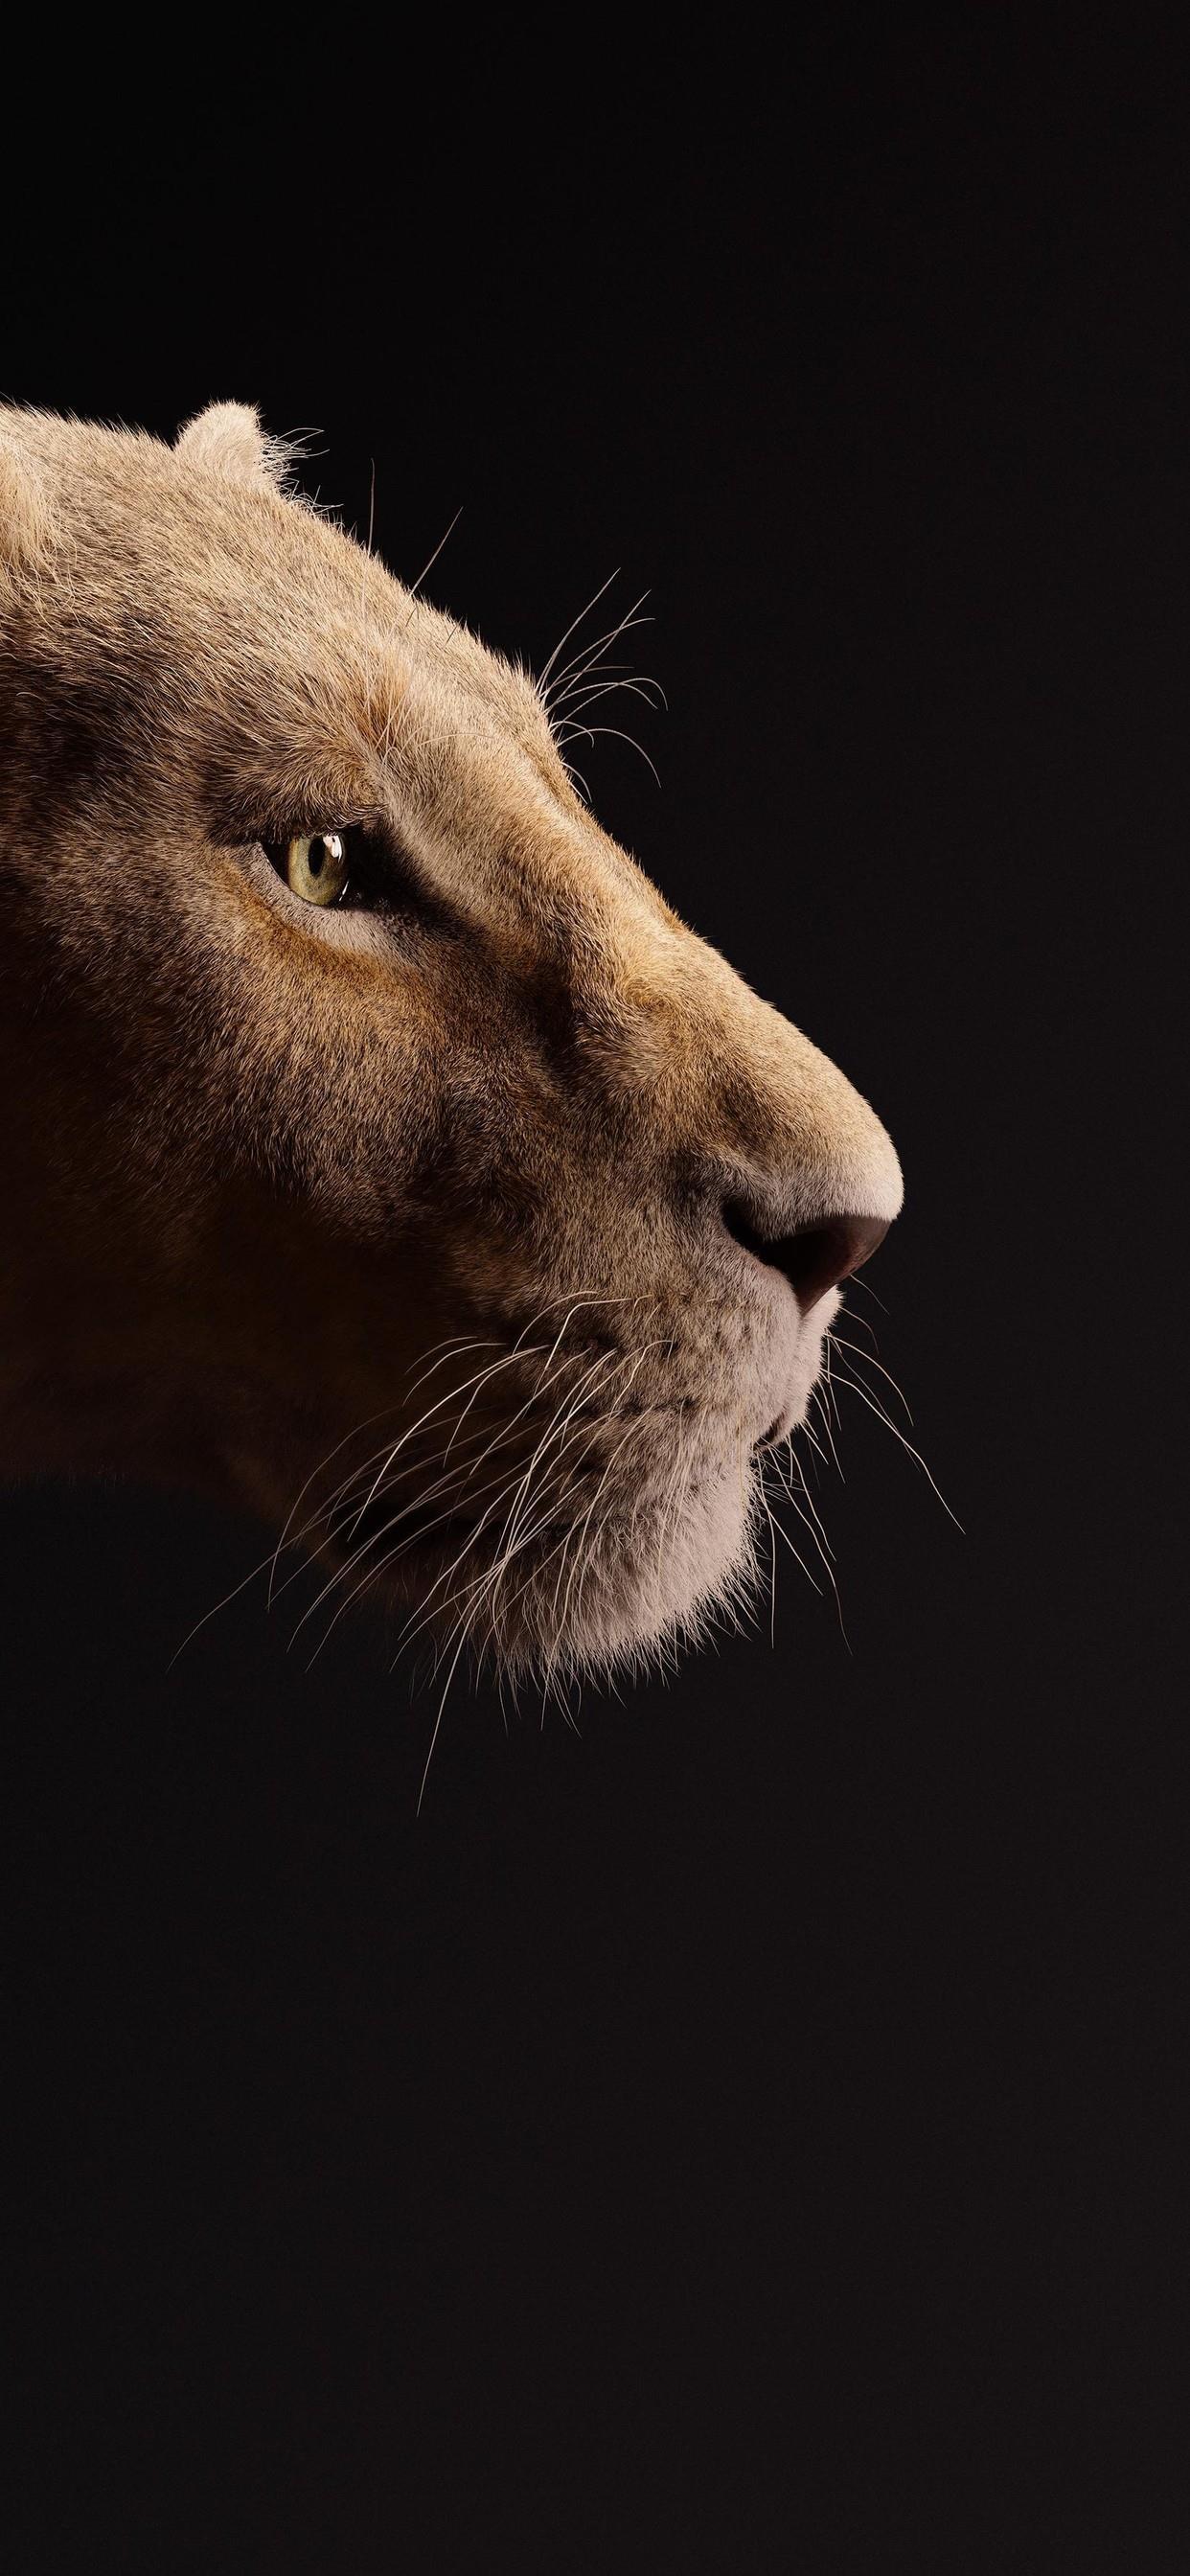 beyonce as nala the lion king 2019 5k iPhone Wallpaper Free Download